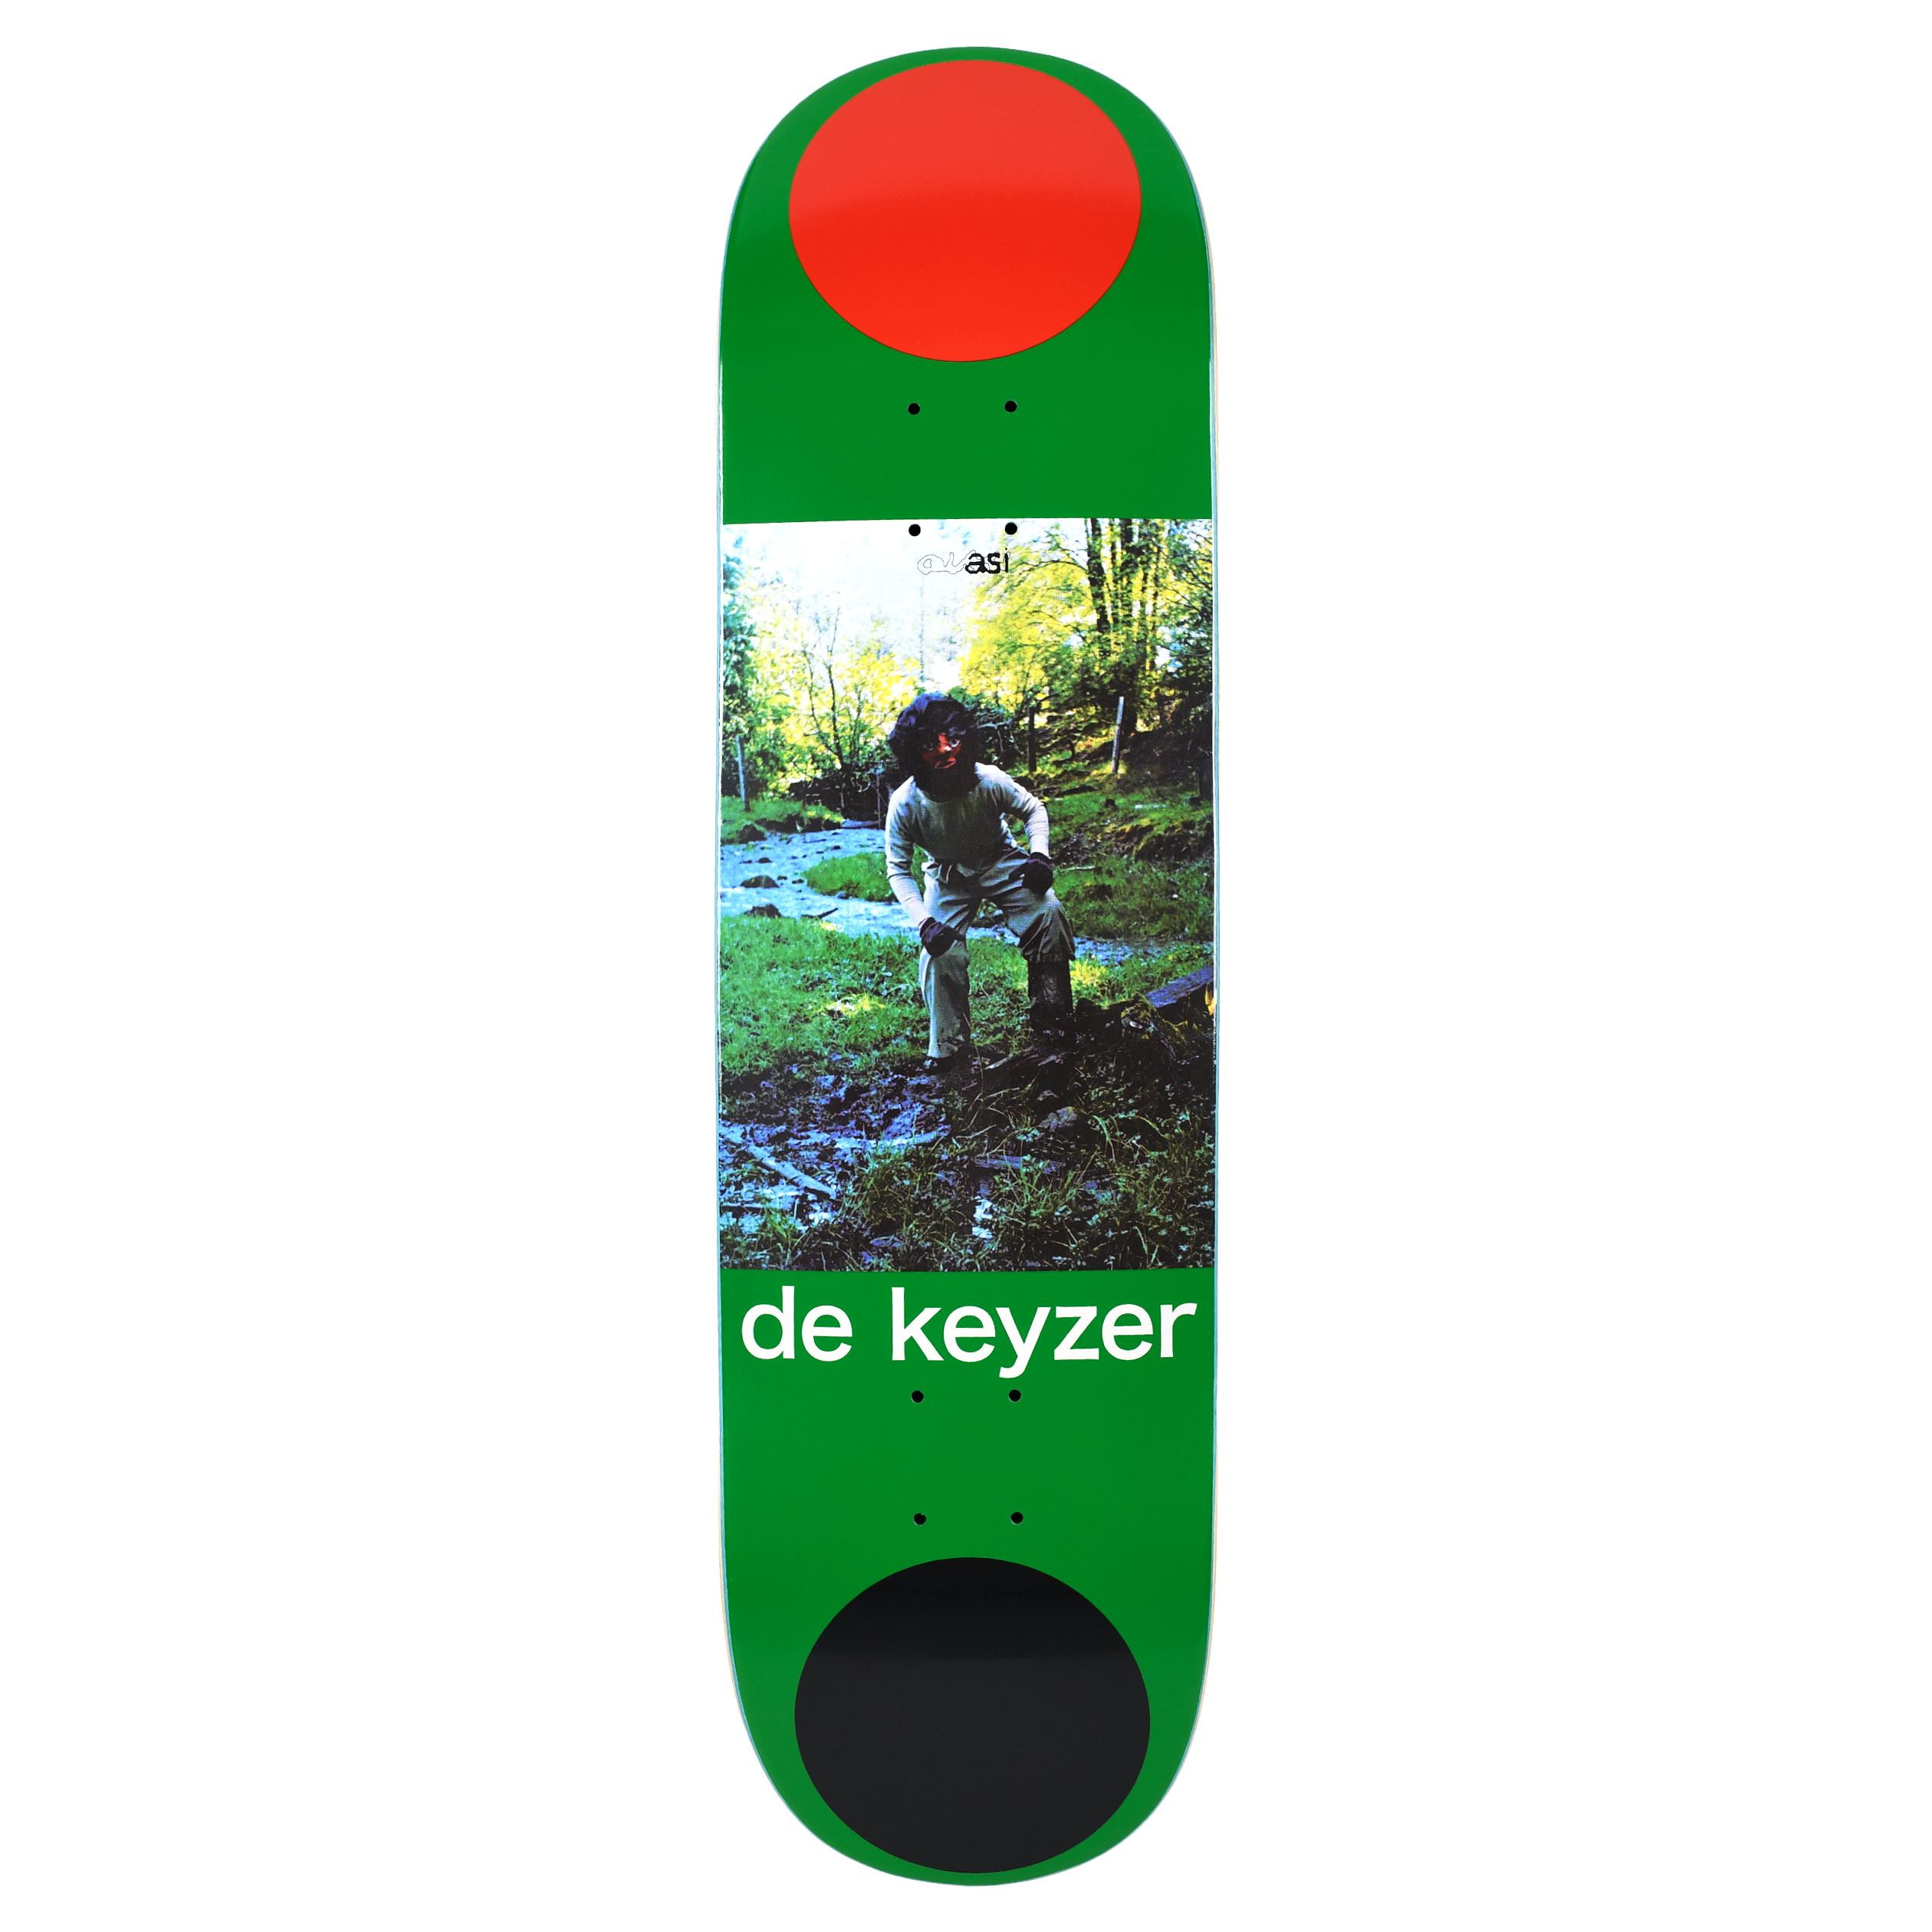 Bobby Dekeyzer Deck - 8.5